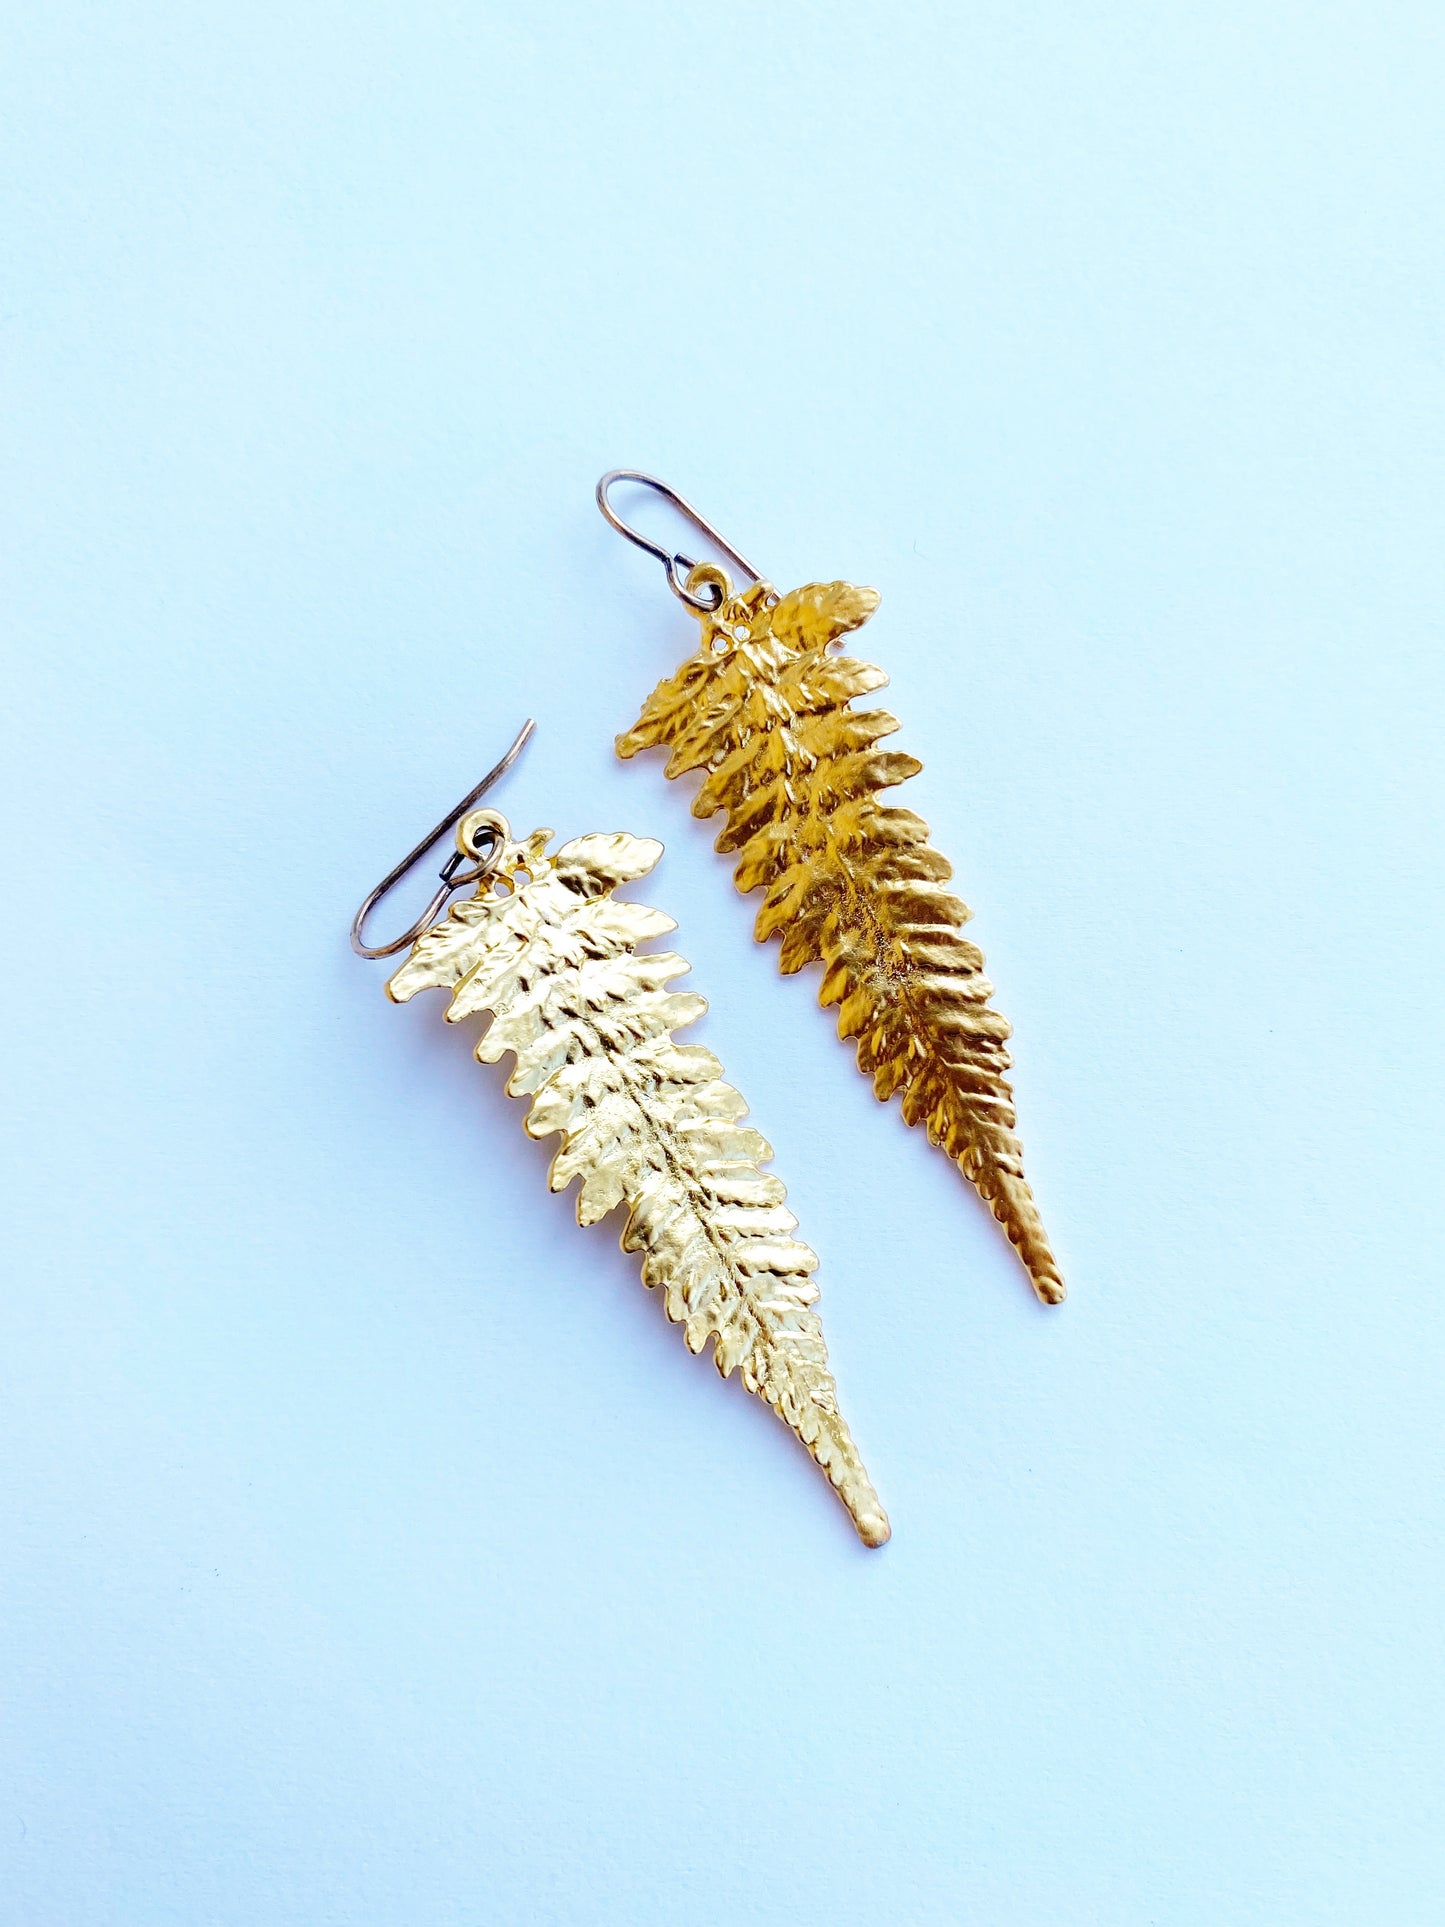 Gold Ferns. Fern detailed gold charm earrings. - Andria Bieber Designs 